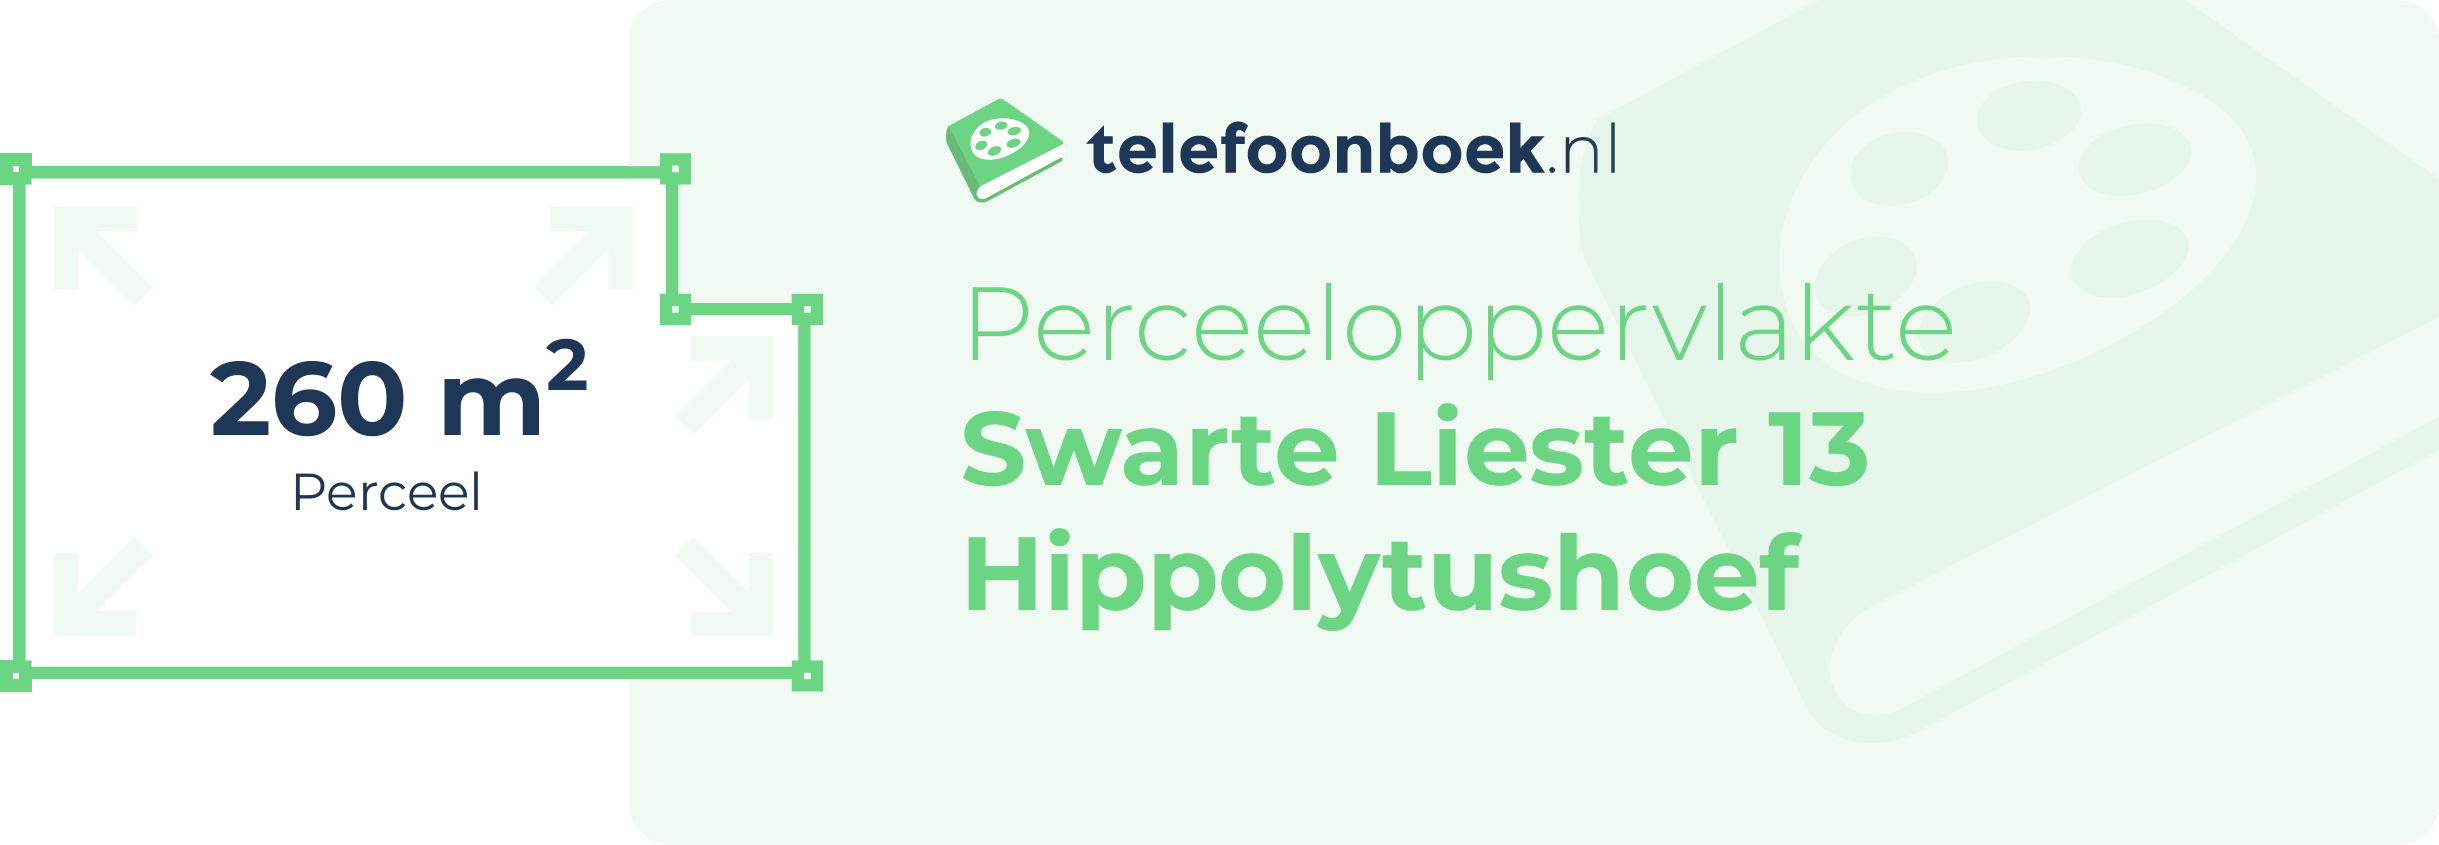 Perceeloppervlakte Swarte Liester 13 Hippolytushoef